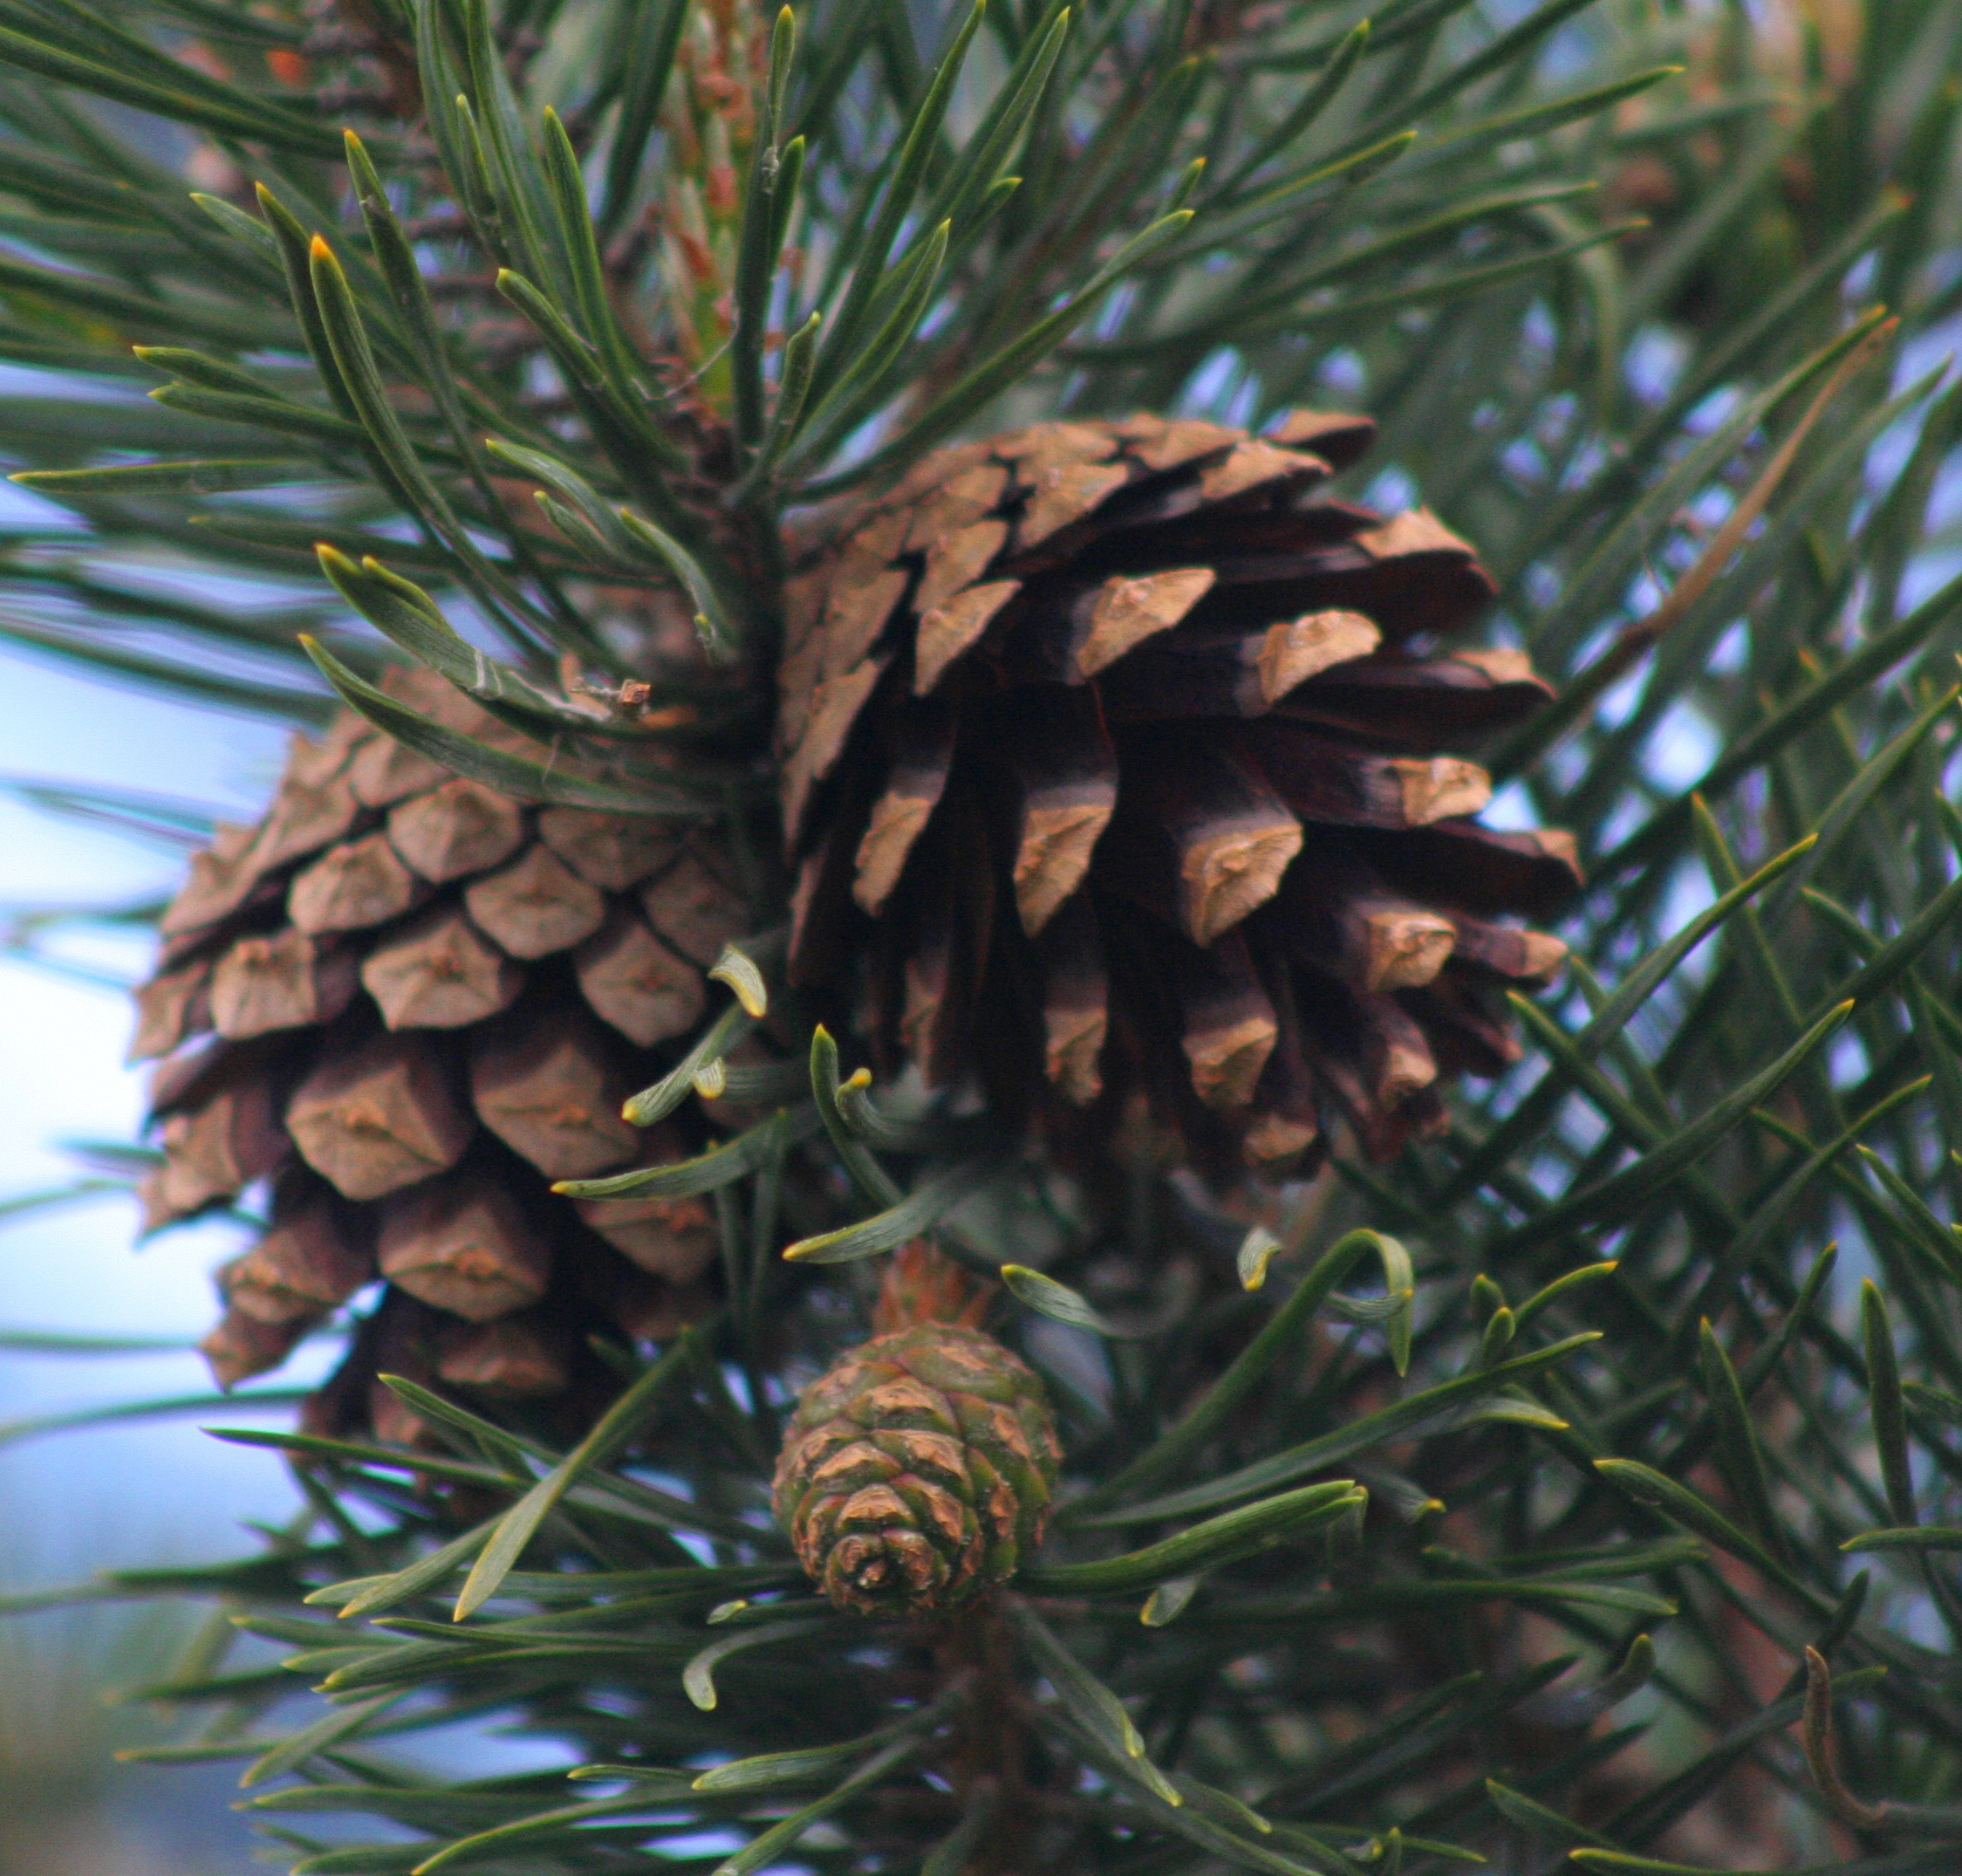 File:Pine cones - Scots Pine.jpg - Wikimedia Commons